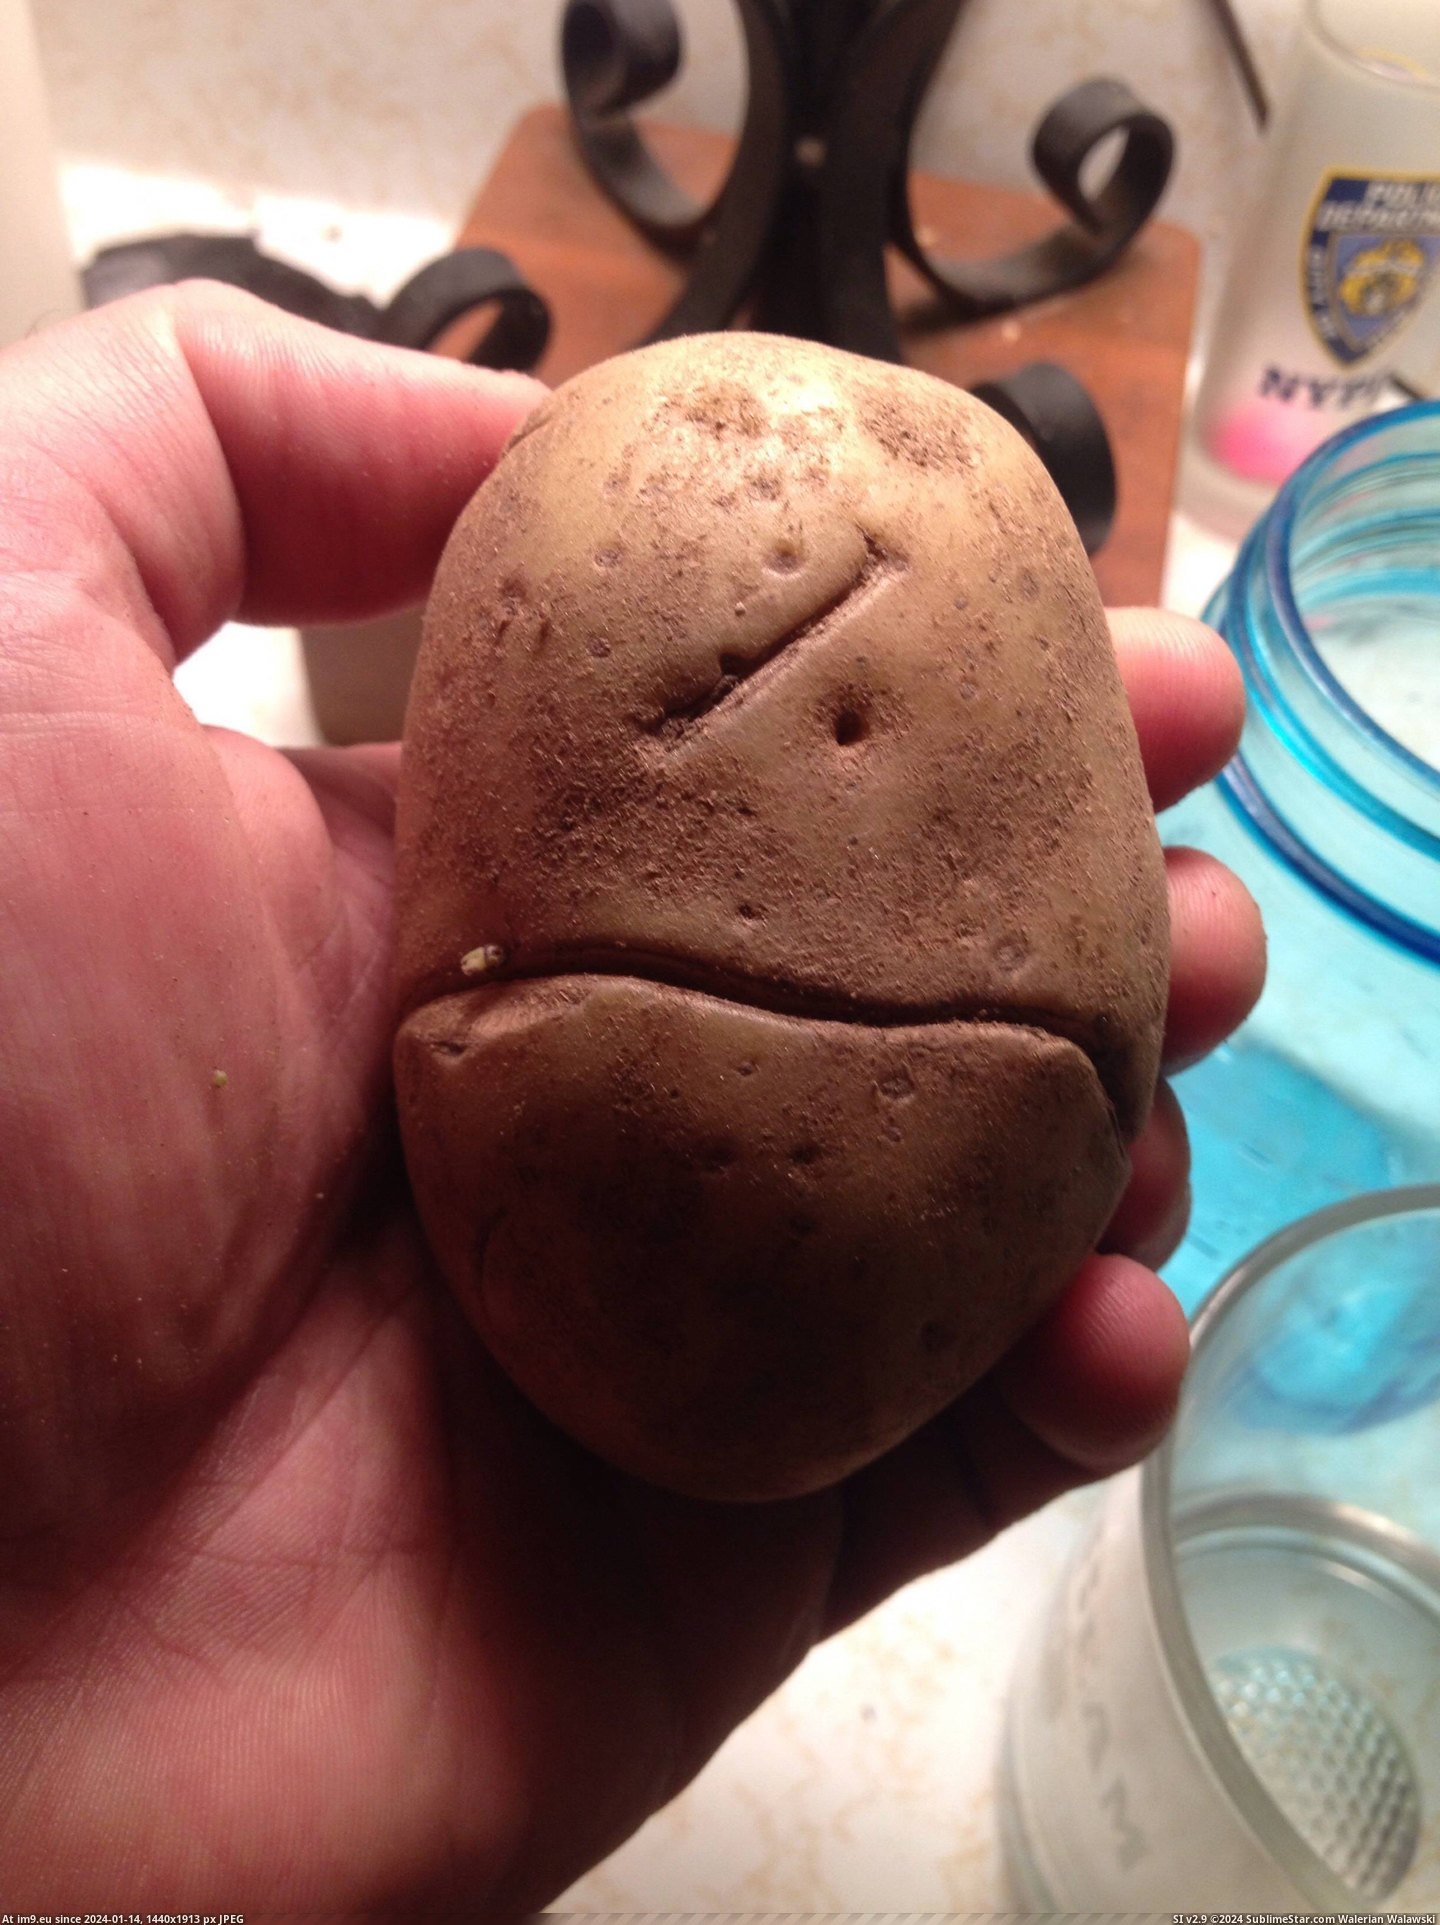 #One #Park #Potato #Eyed #South #Canadian [Mildlyinteresting] This potato looks like a one-eyed Canadian from South Park. Pic. (Bild von album My r/MILDLYINTERESTING favs))